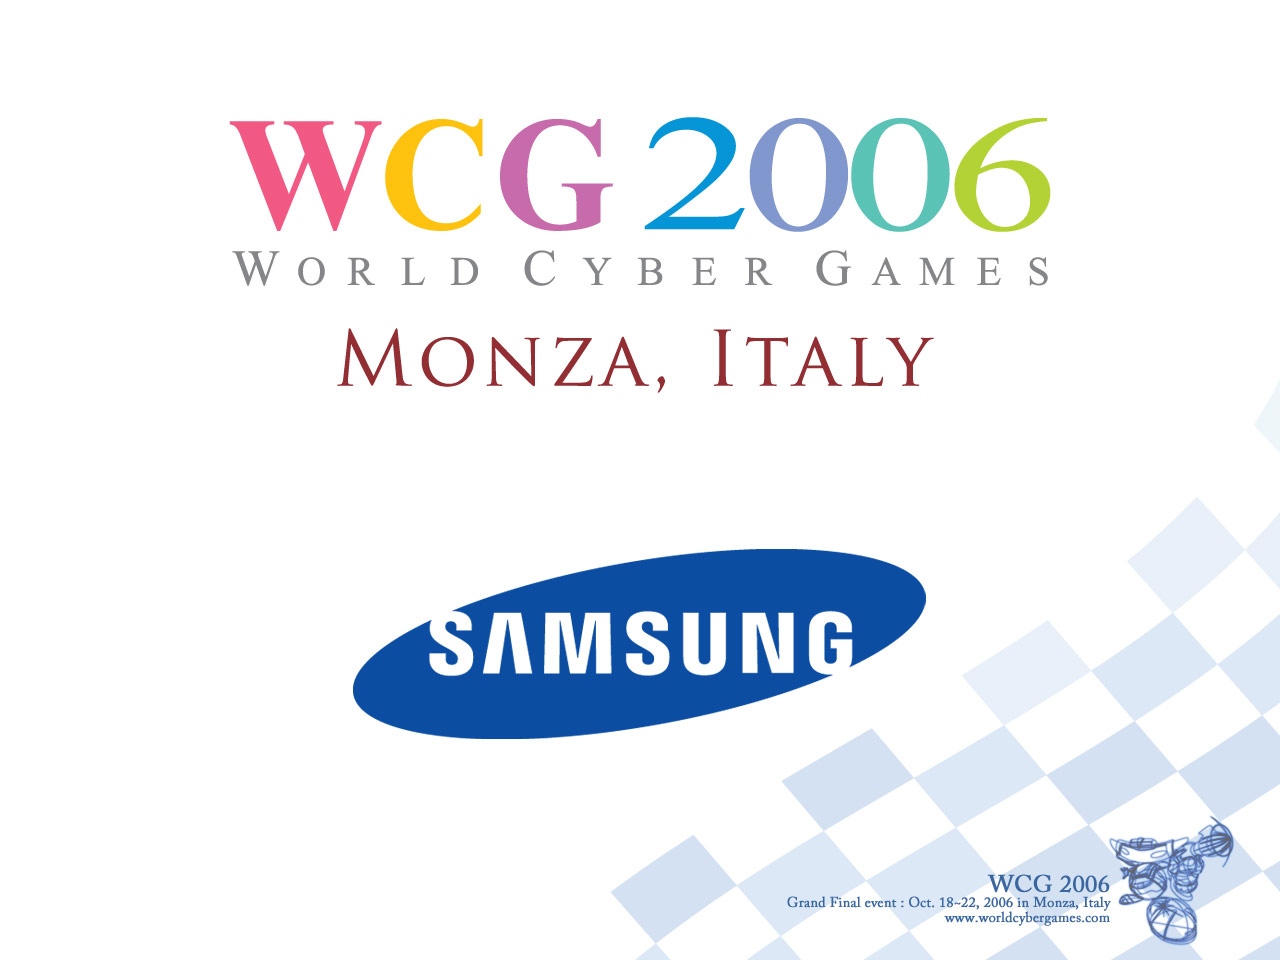 WCG 2006, Monza, Italy - Samsung